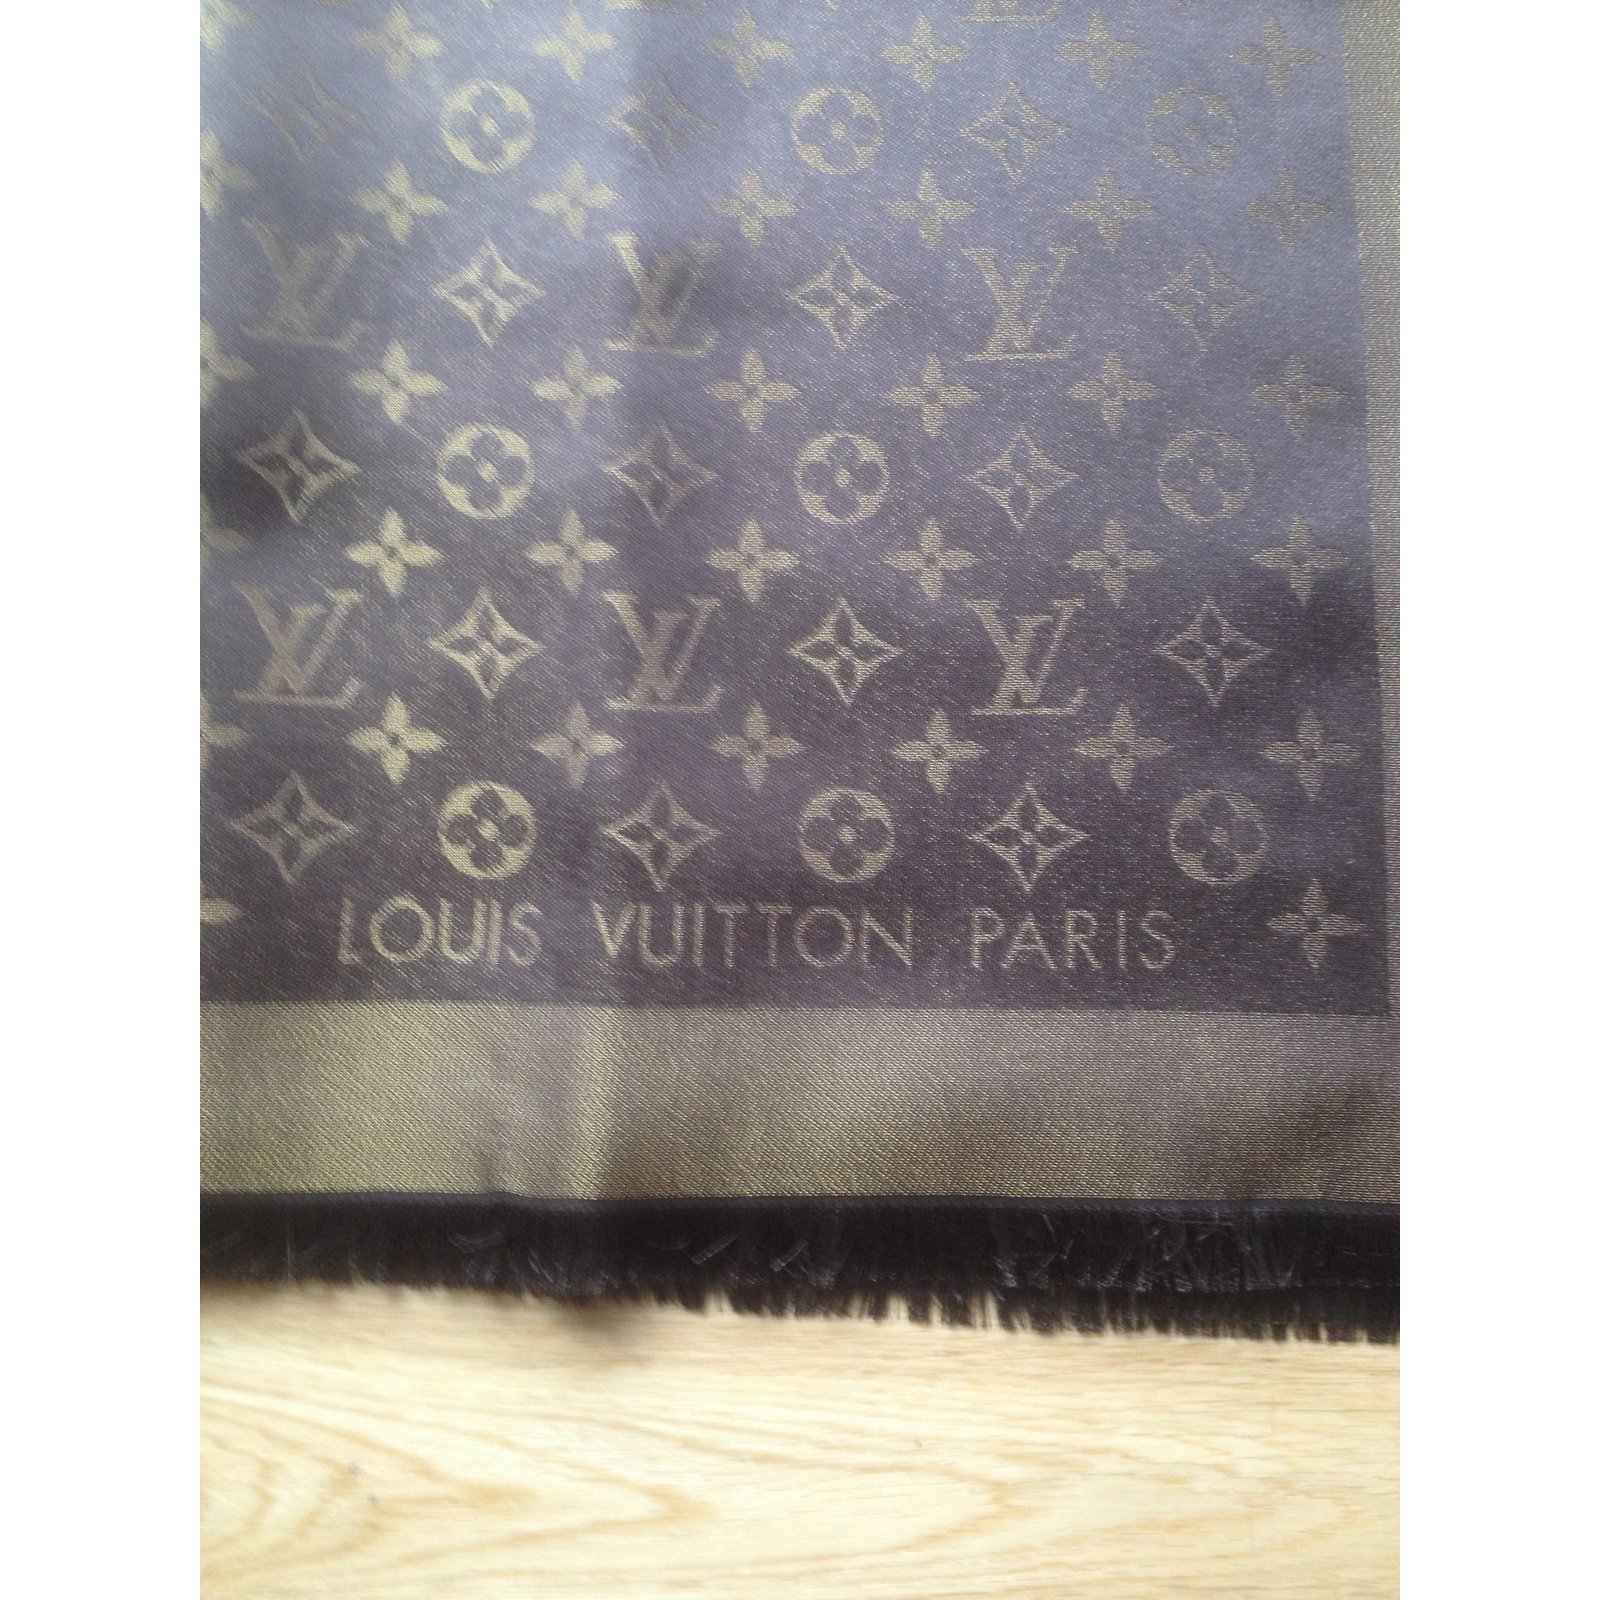 Louis Vuitton Silk Scarf Monogram Pattern Brown 55 x 54cm Vintage